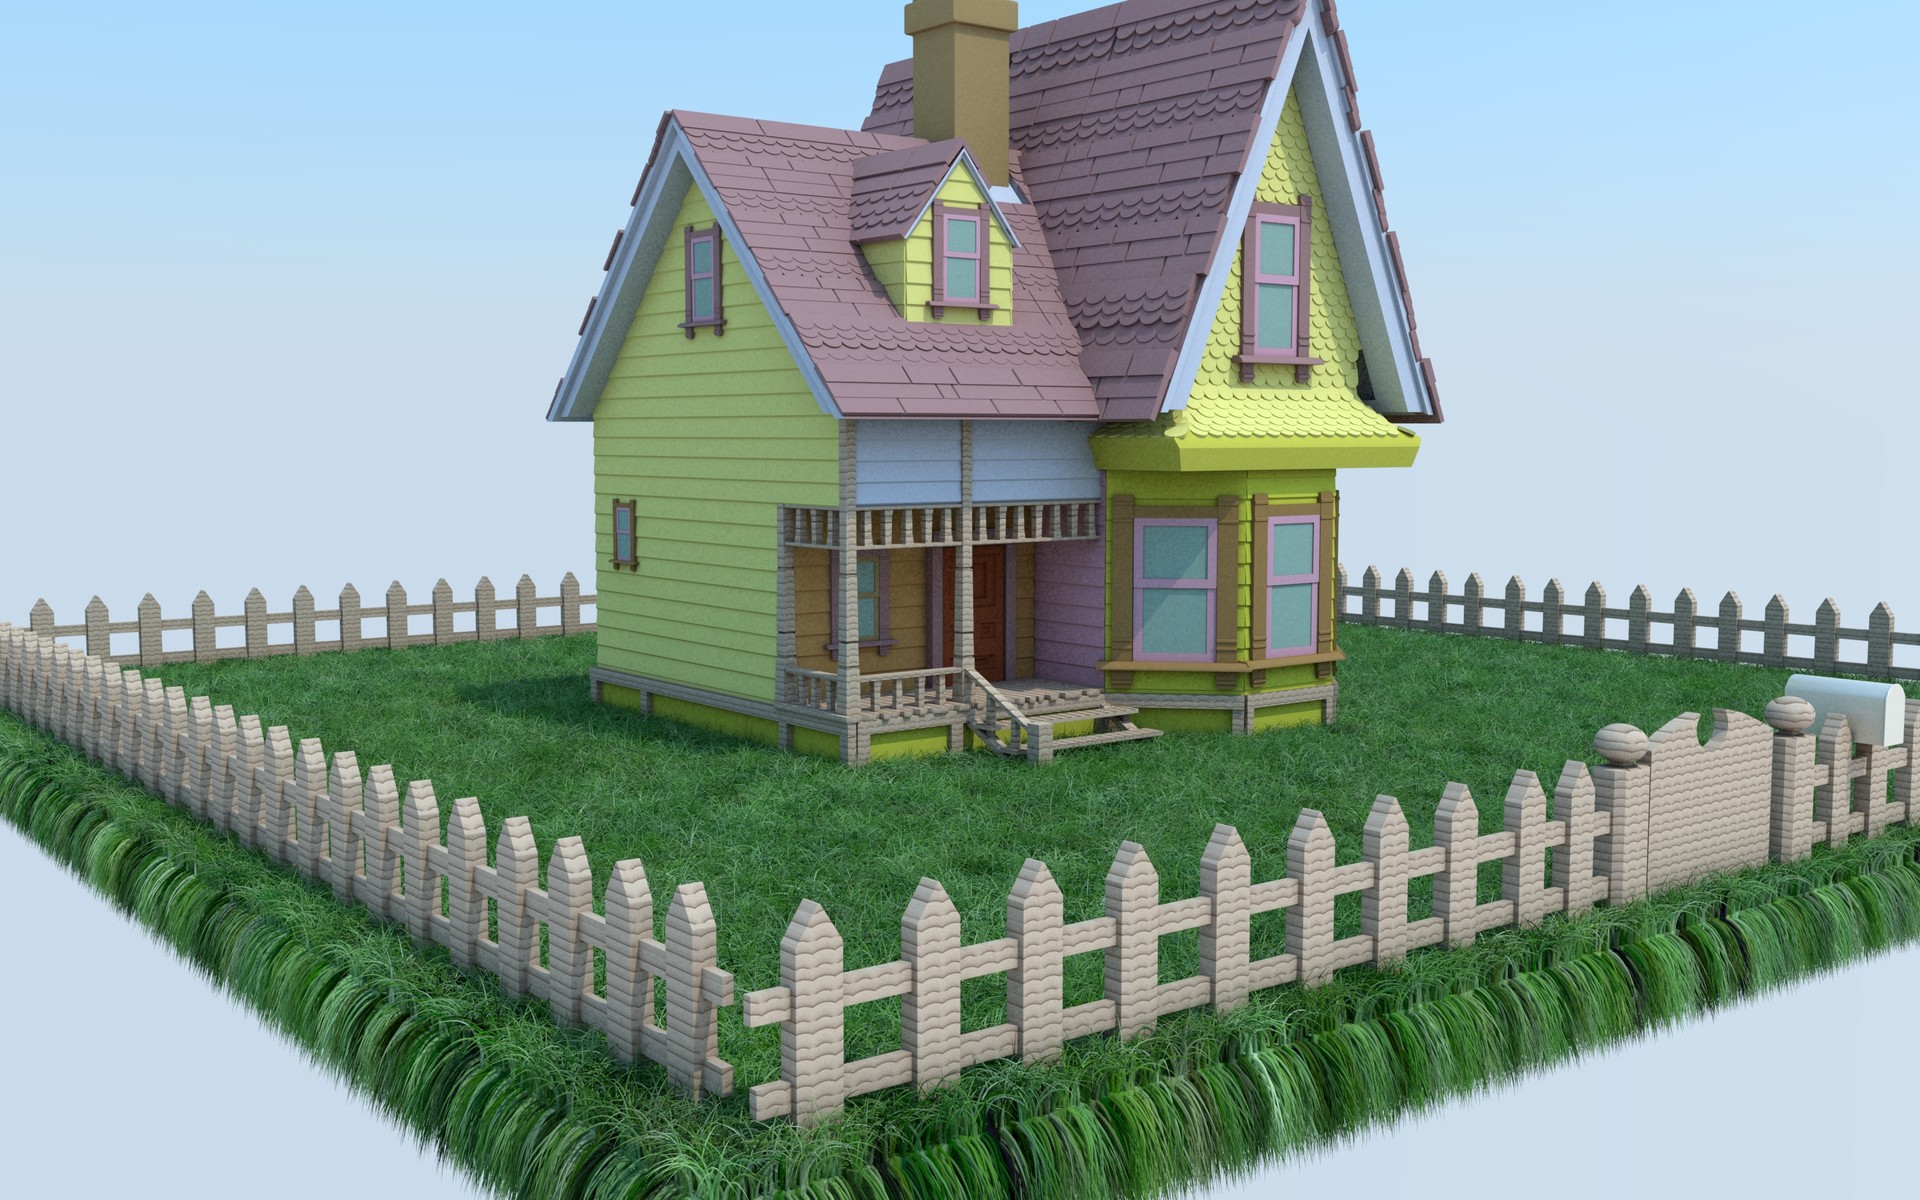 Blender: Pixar's Up house - 3D model by raya.creates (@raya.creates)  [e20688b]